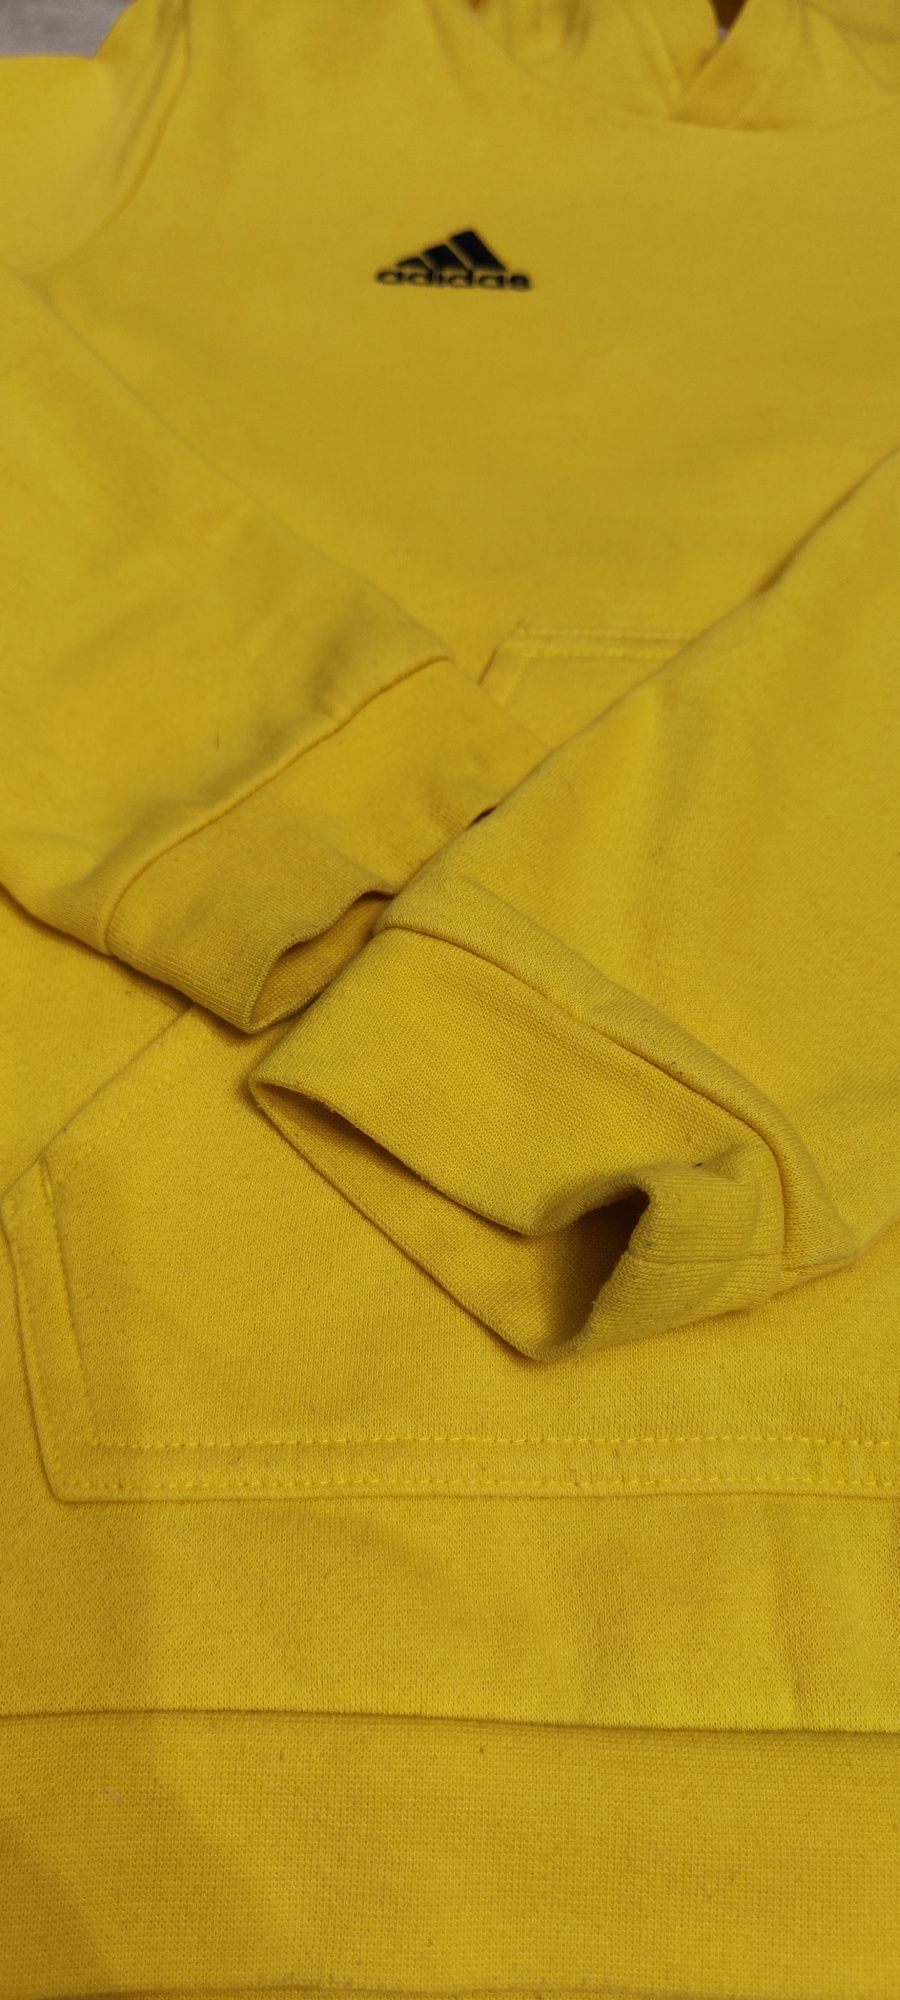 Adidas bluza chłopięca żółta 152 cm